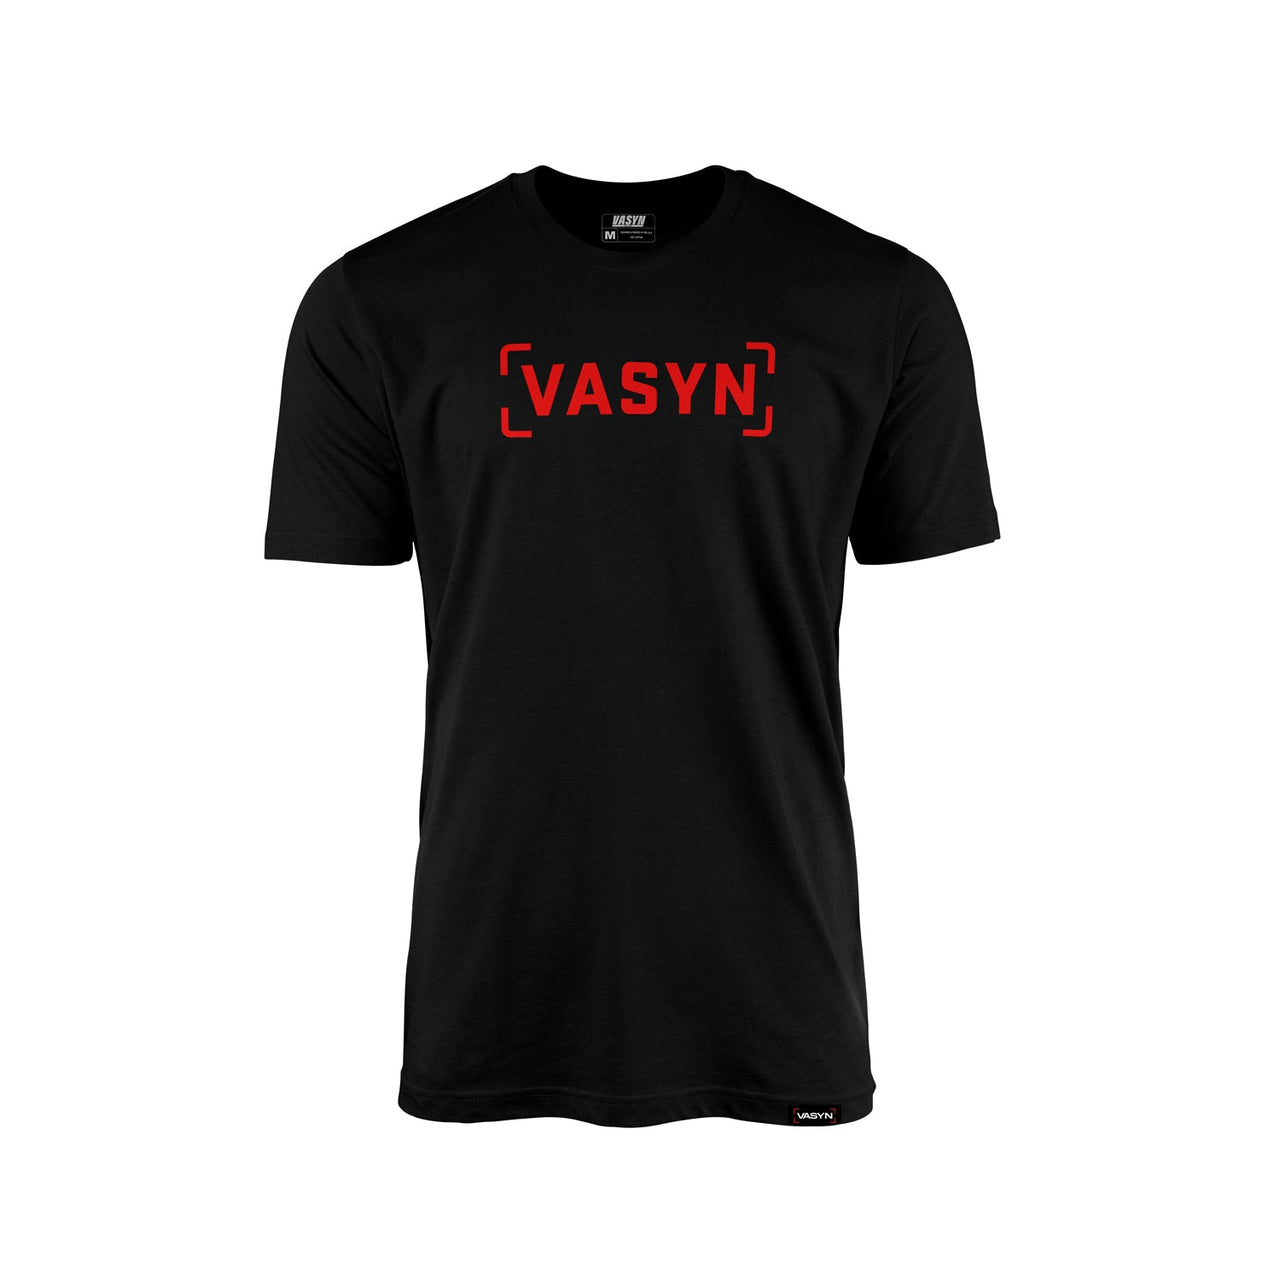 Vasyn Drip Tee- Red - Vasyn | Official Store